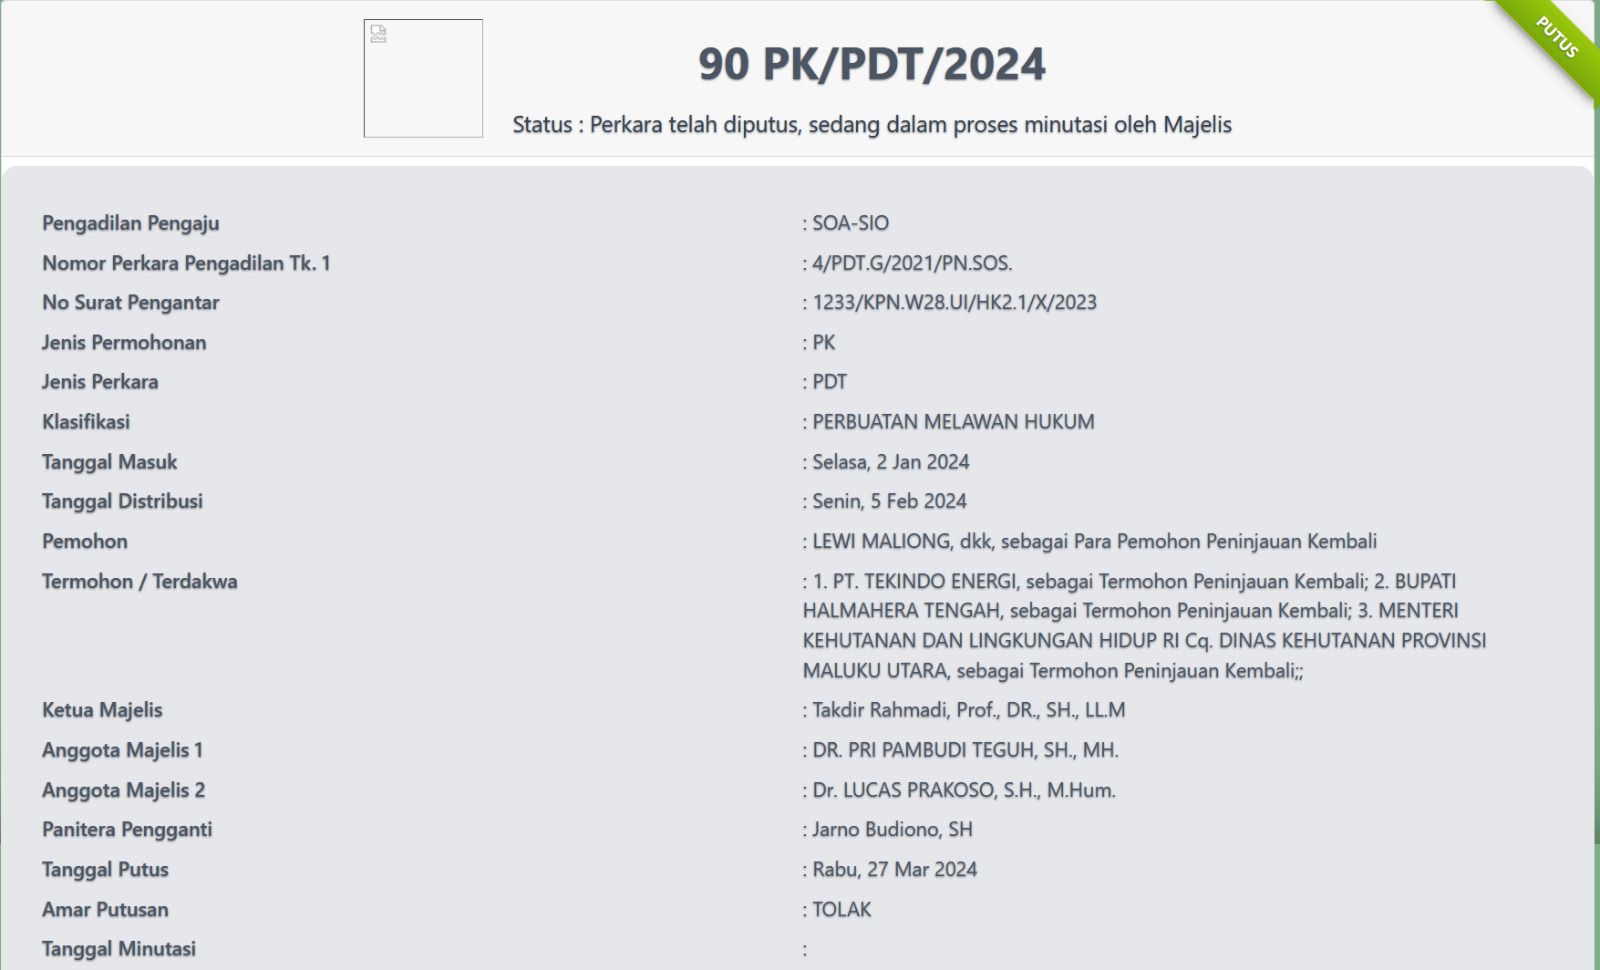 Putusan tolak PK yang dikeluarkan MA nomor 90 PK/PDT/2024.